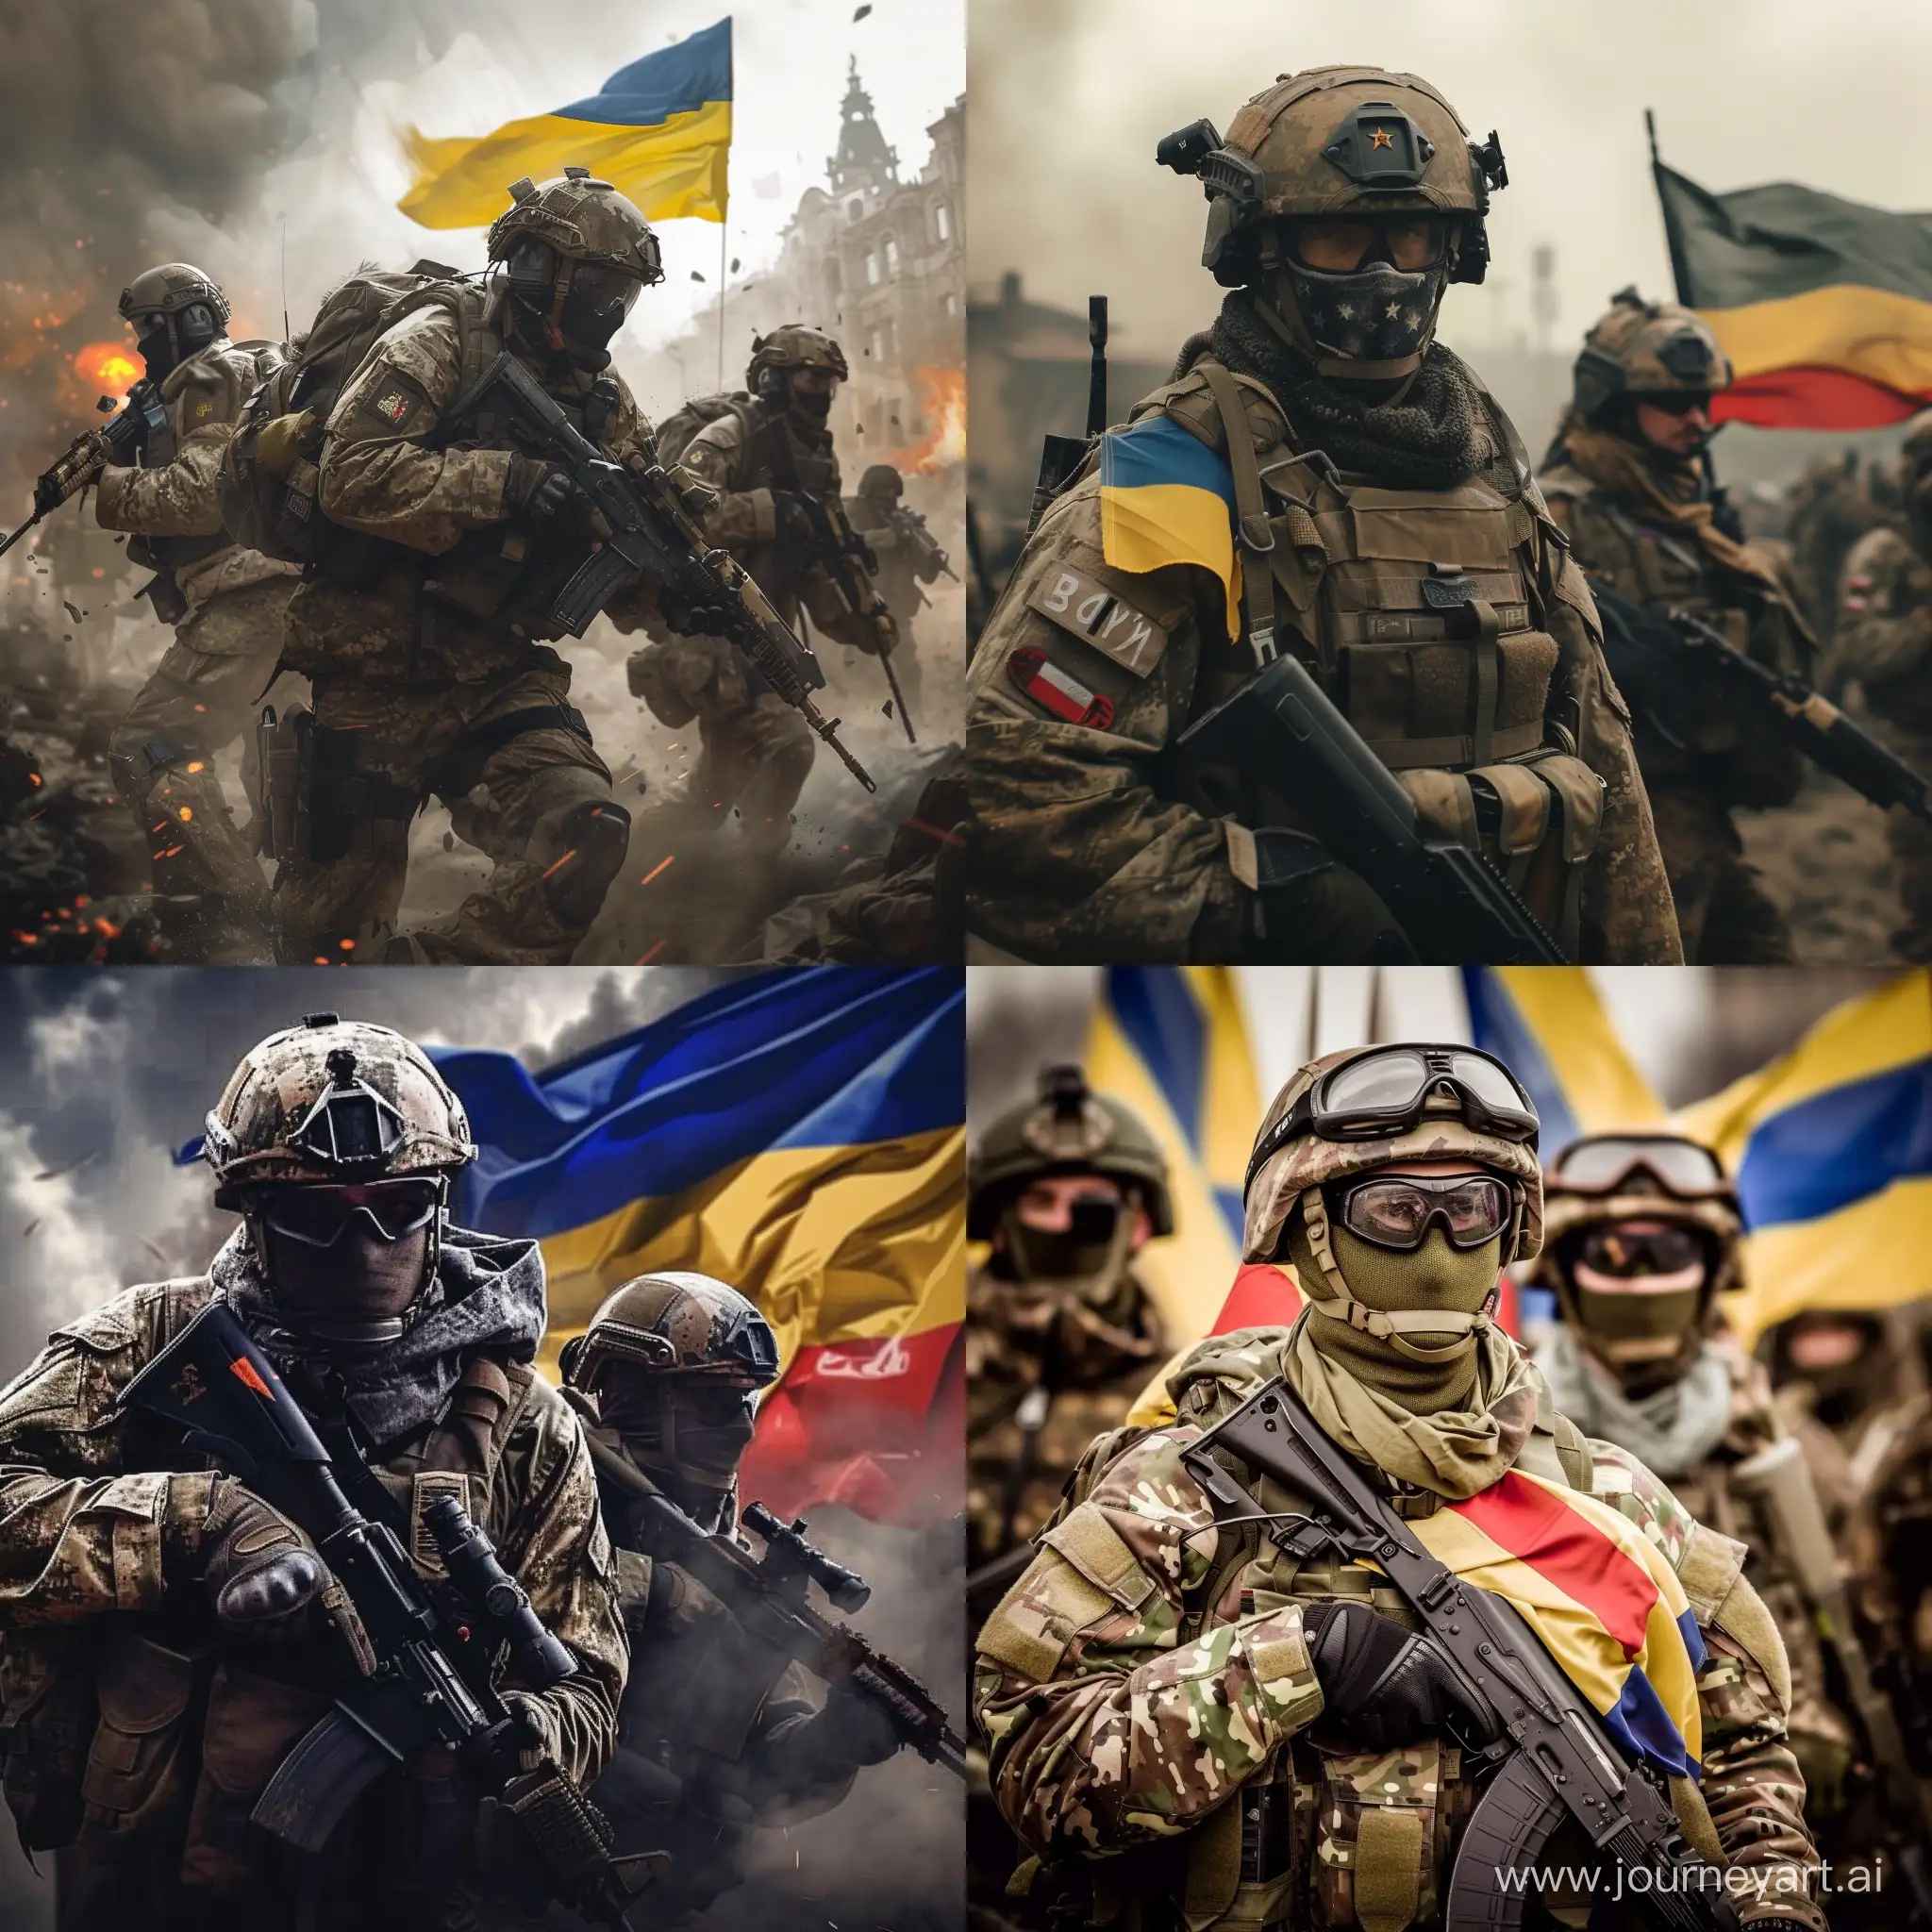 Futuristic-Battle-Ukraine-vs-Czech-Republic-War-Version-6-Aerial-Combat-11